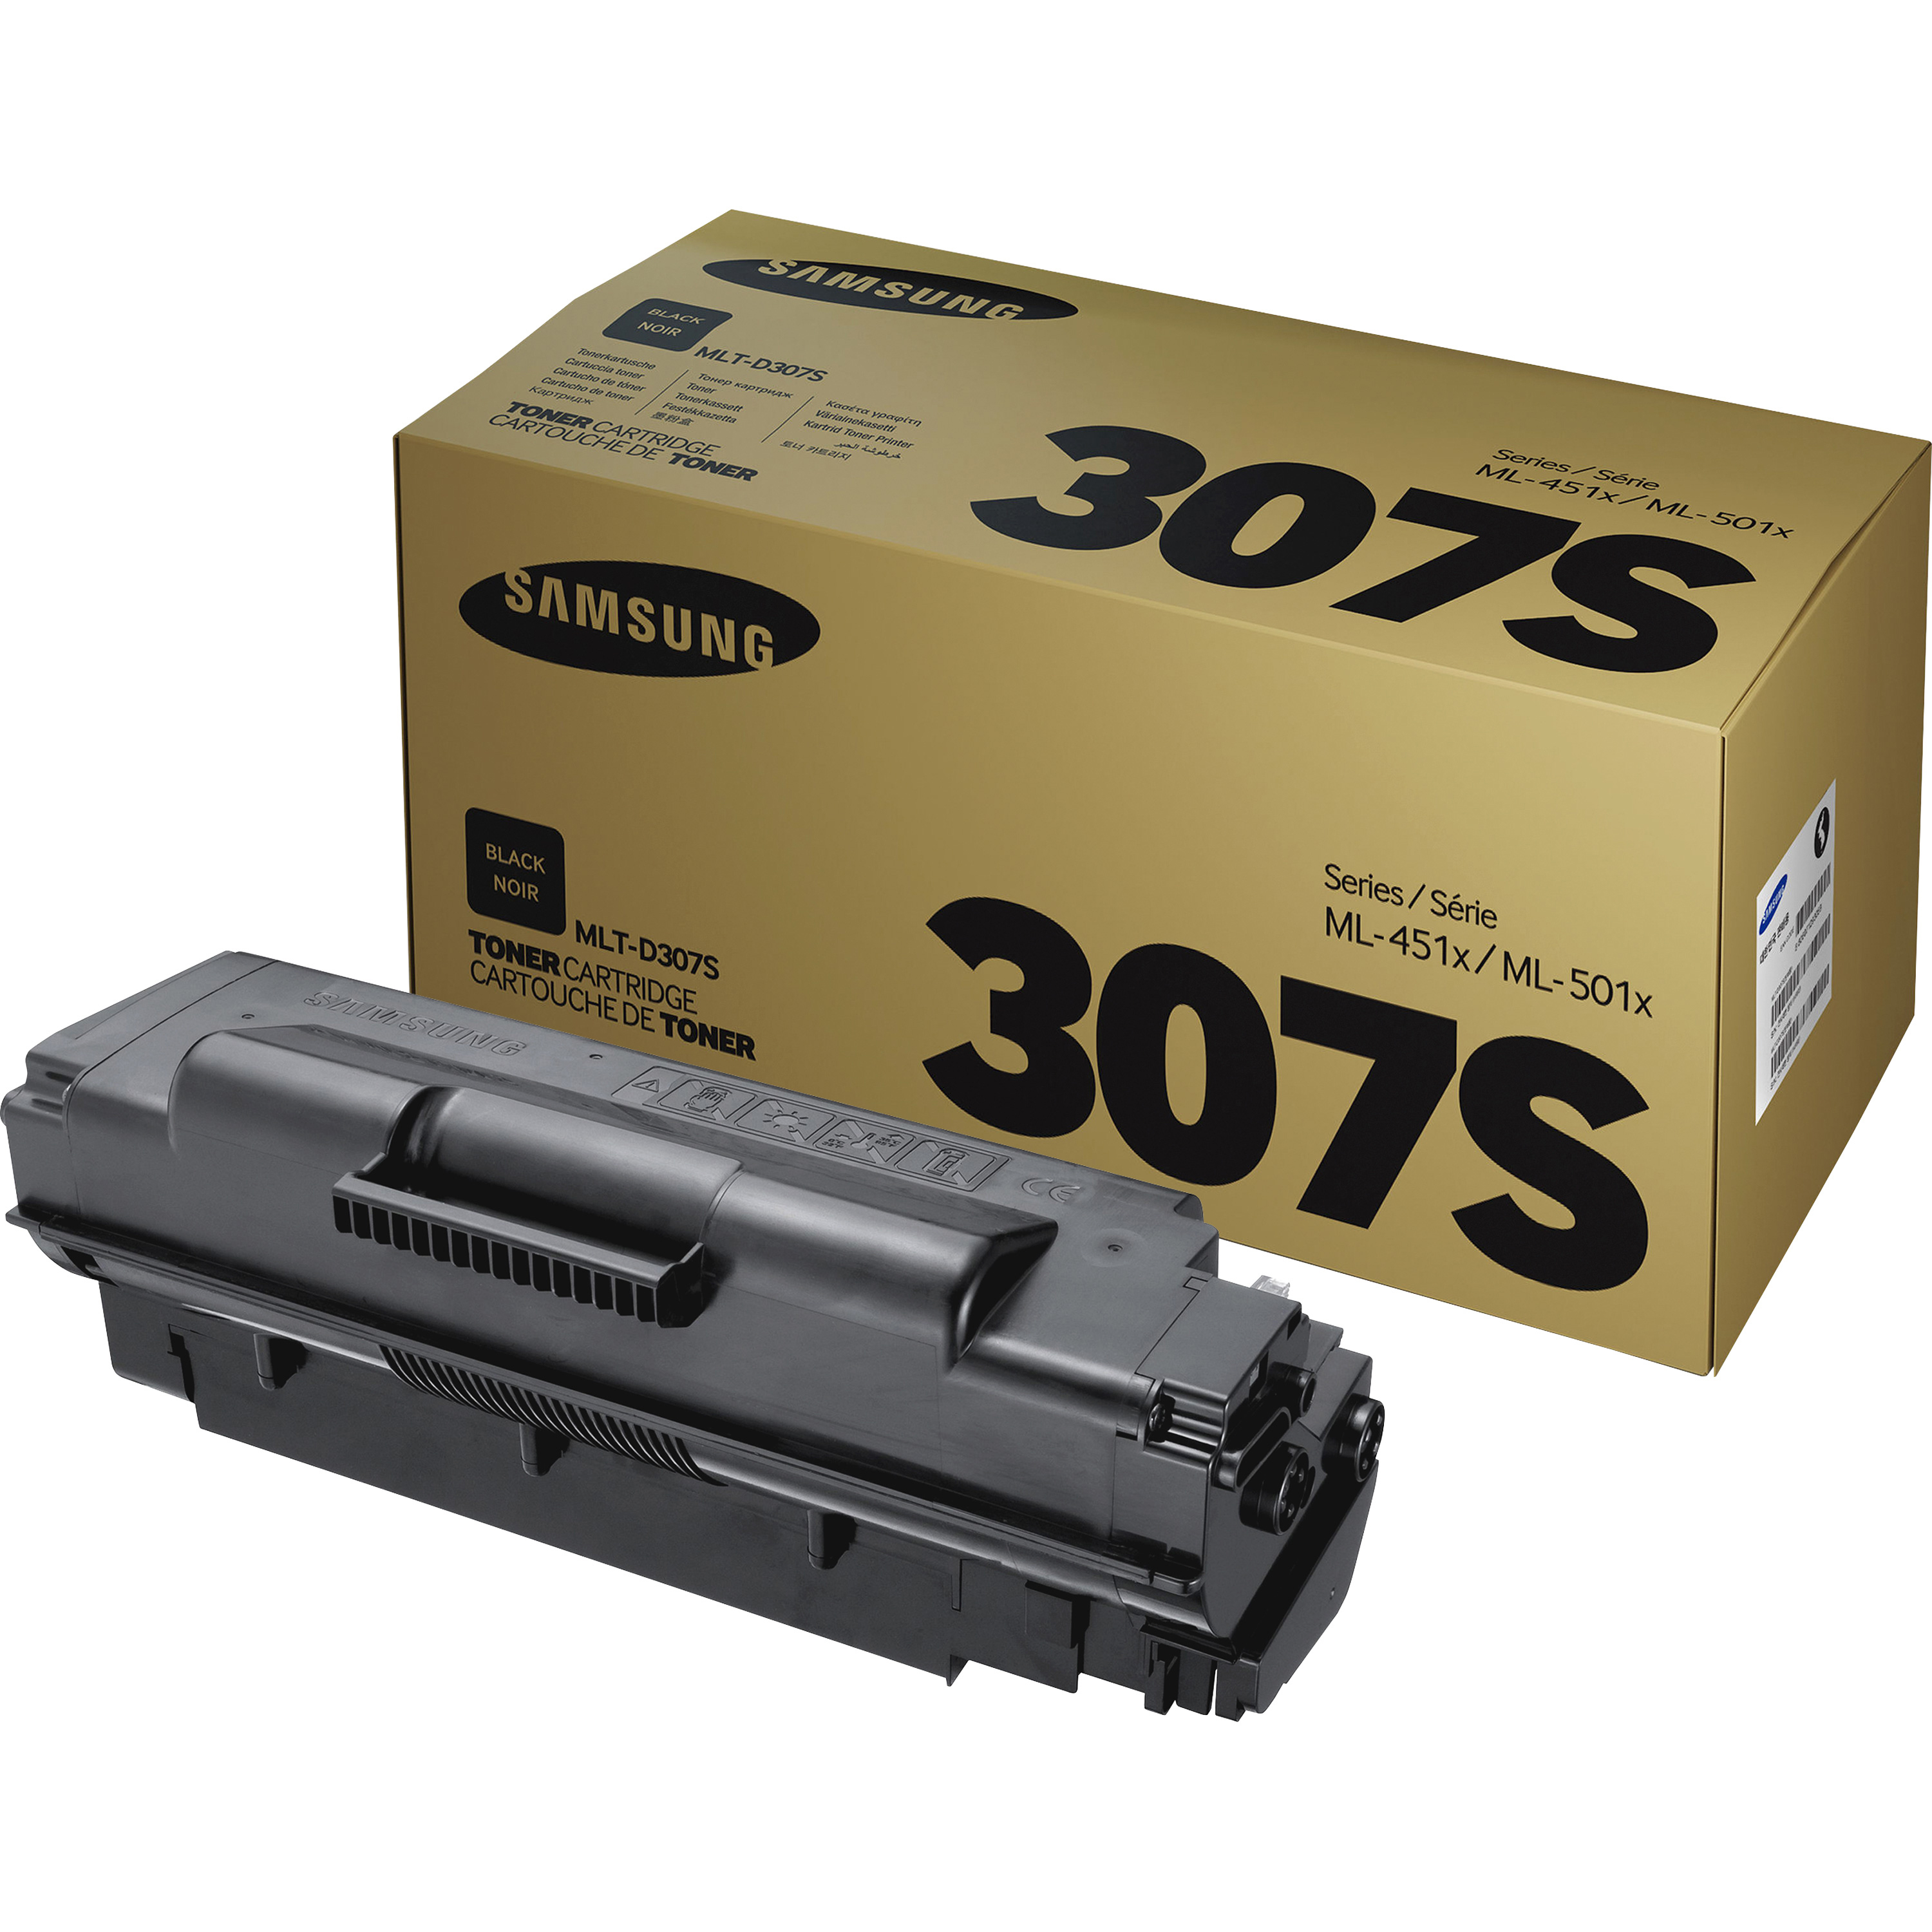 Samsung, HEWSV077A, MLT-D307S (SV077A) Black Toner Cartridge, 1 Each - image 2 of 2